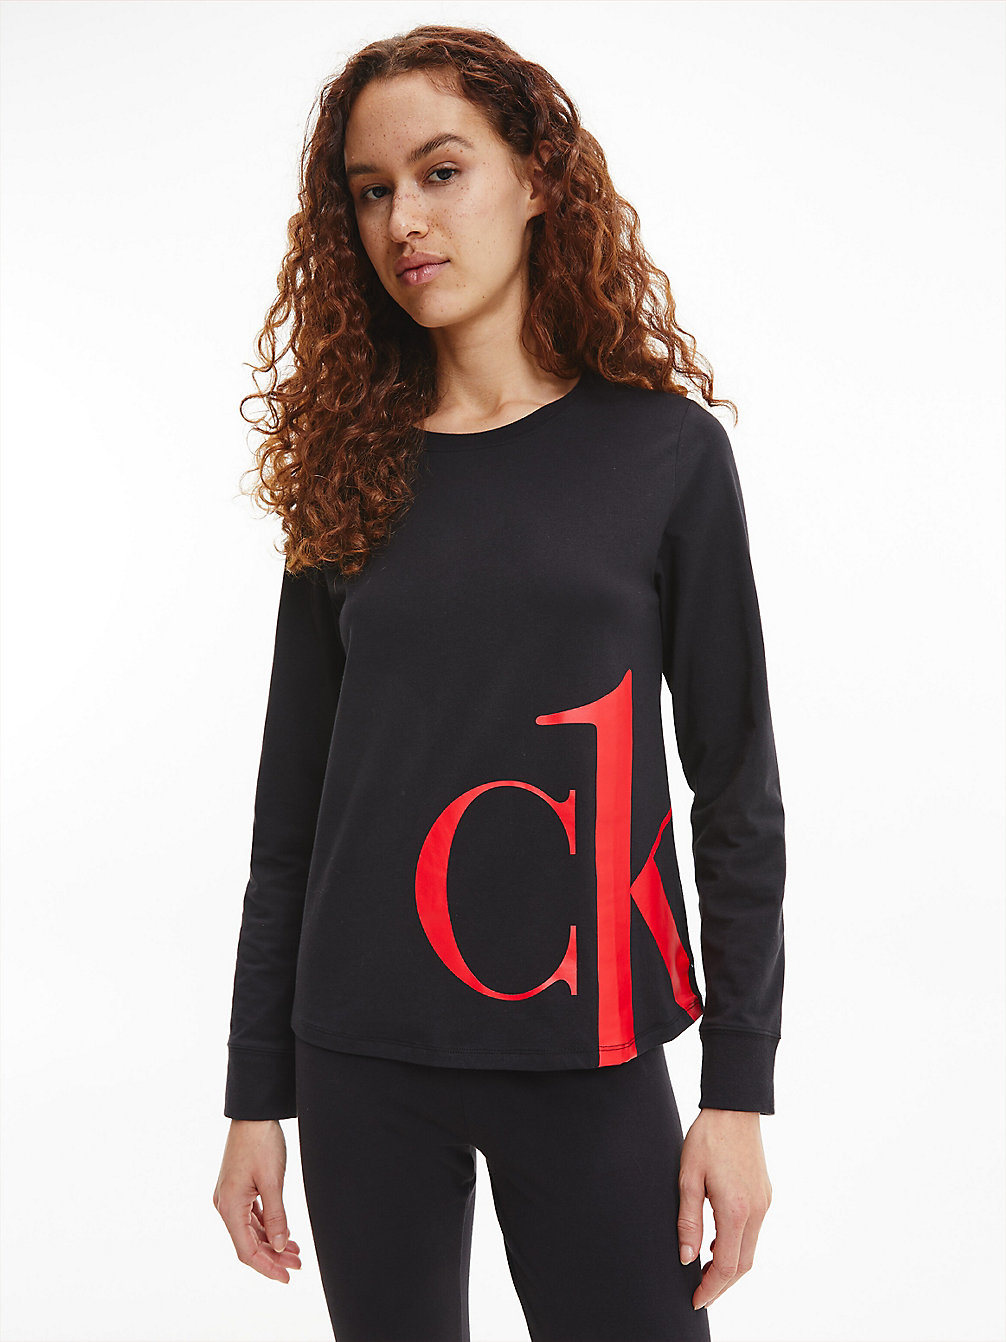 BLACK_EXACT LOGO > Pyjama-Top – CK One > undefined Damen - Calvin Klein